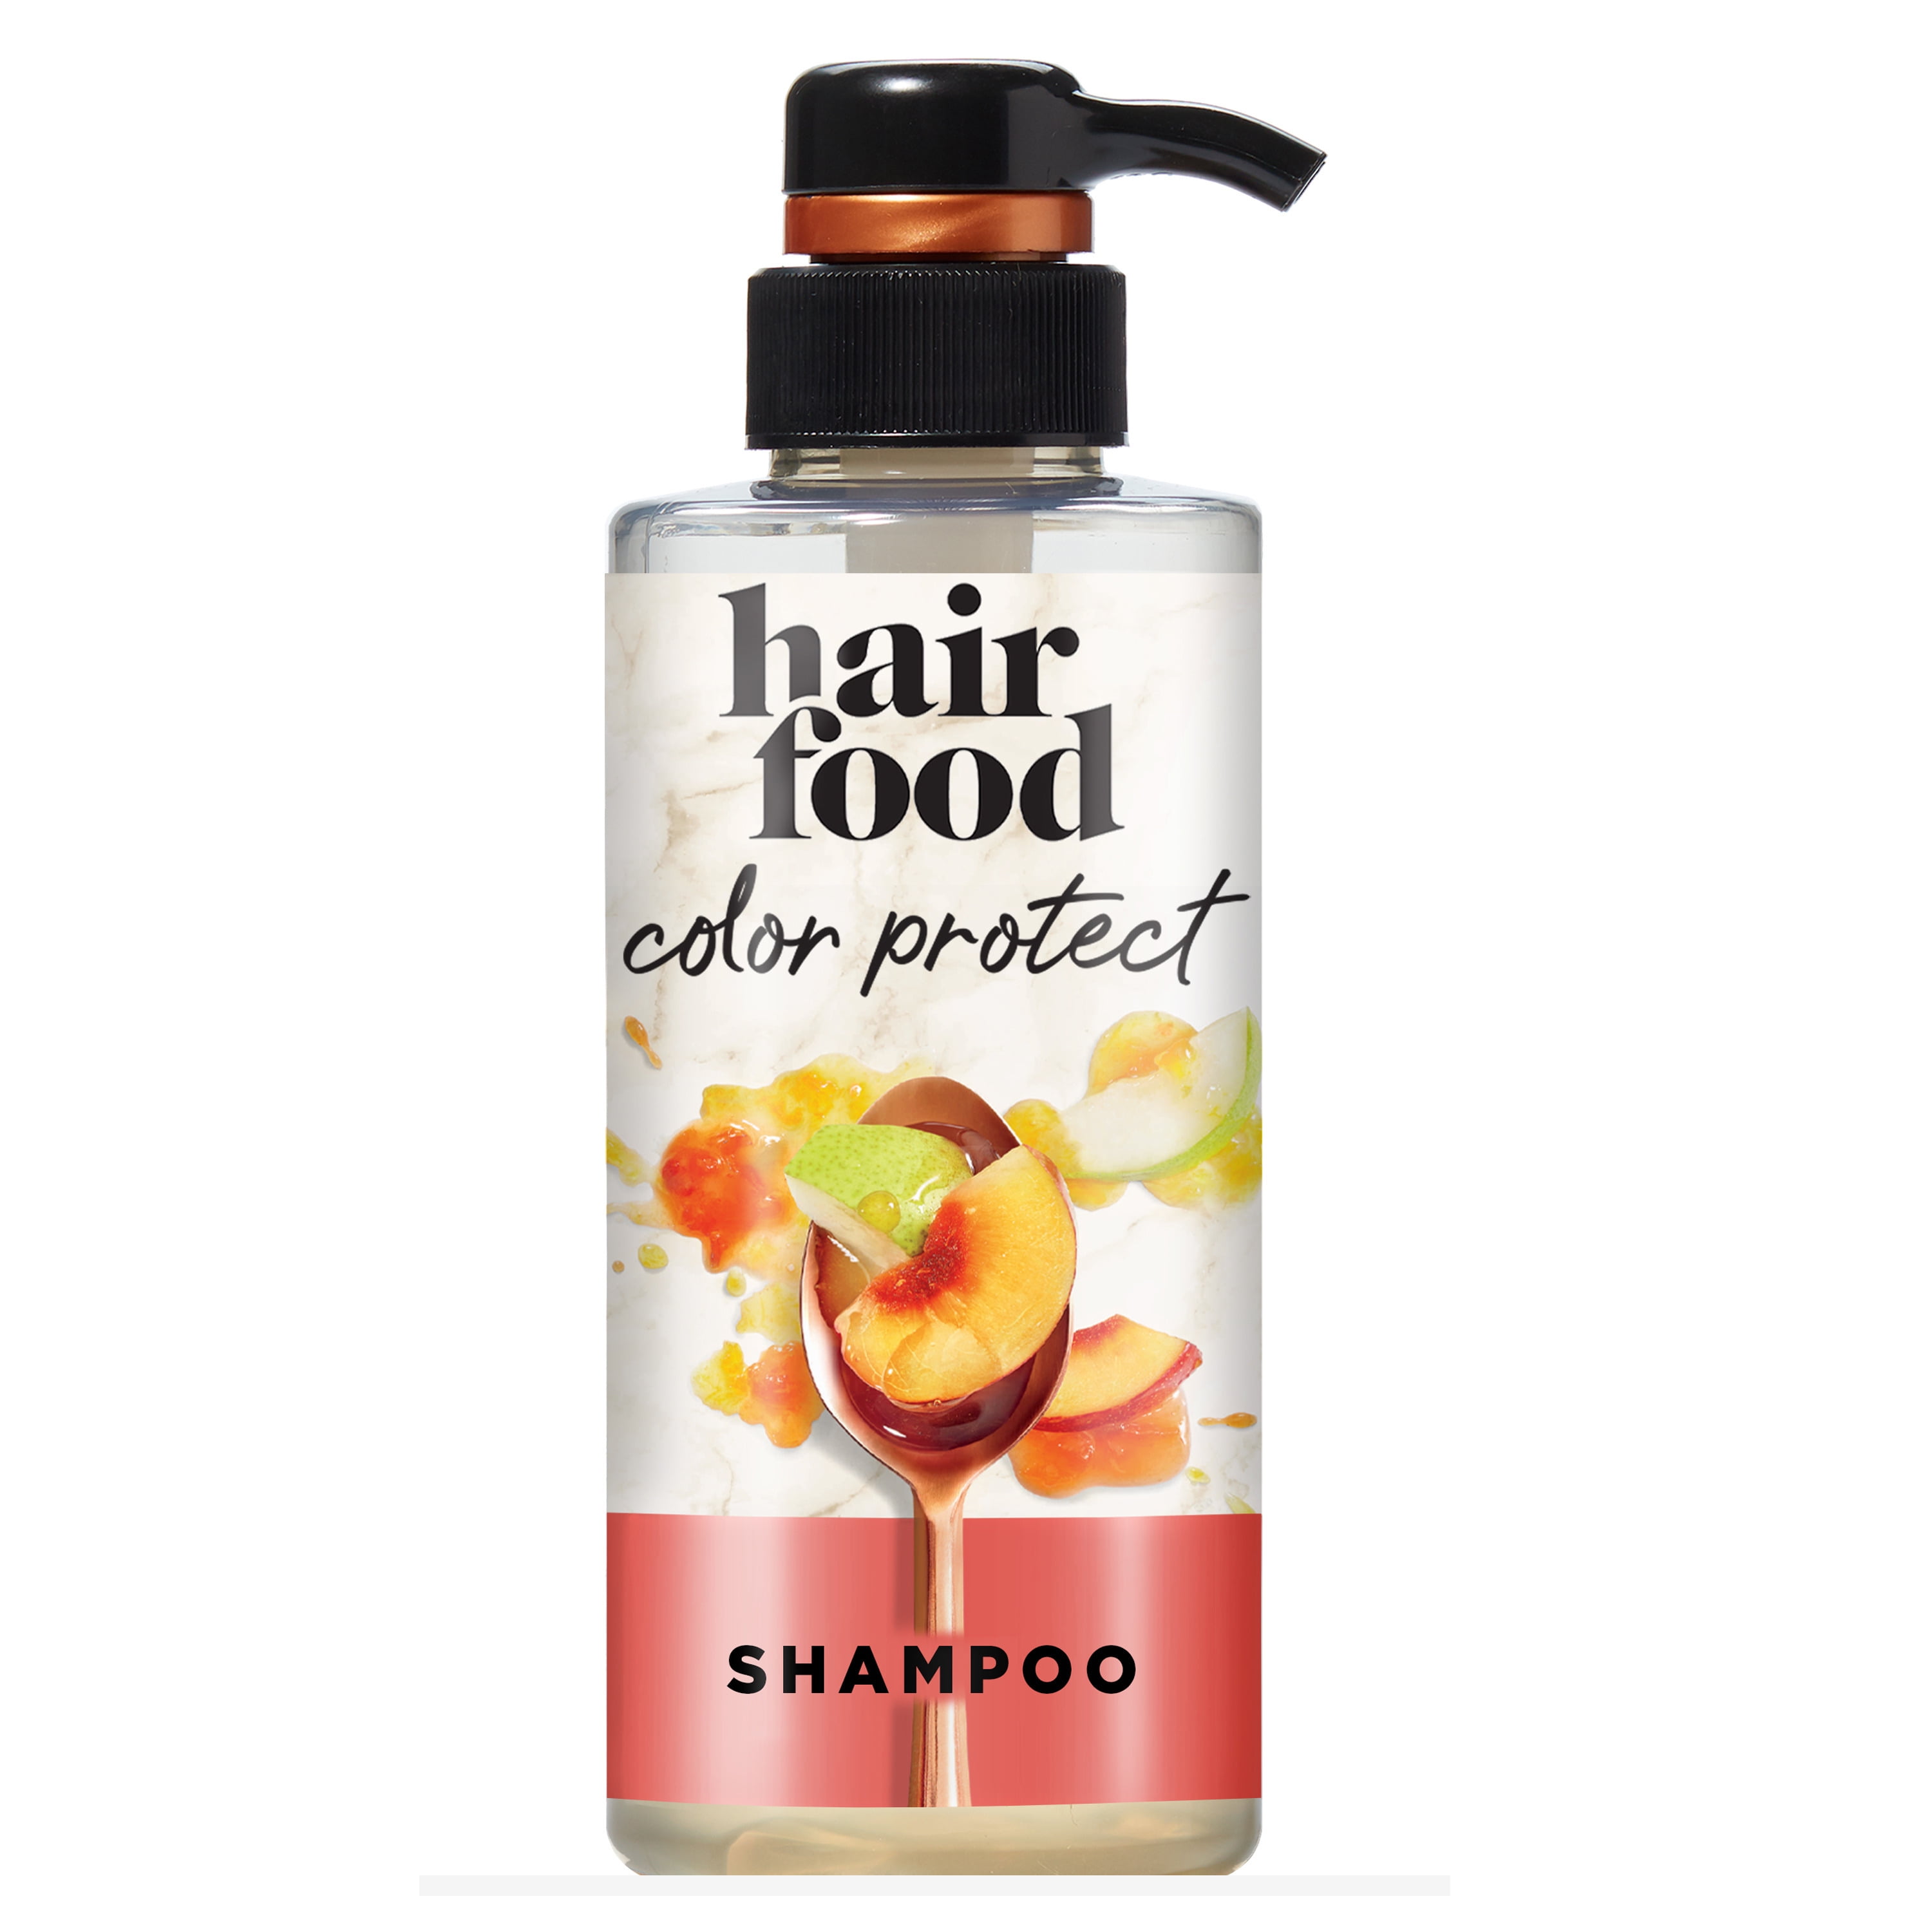 Hair Food Color Protect Shampoo, White Nectarine and Pear, 10.1 fl oz